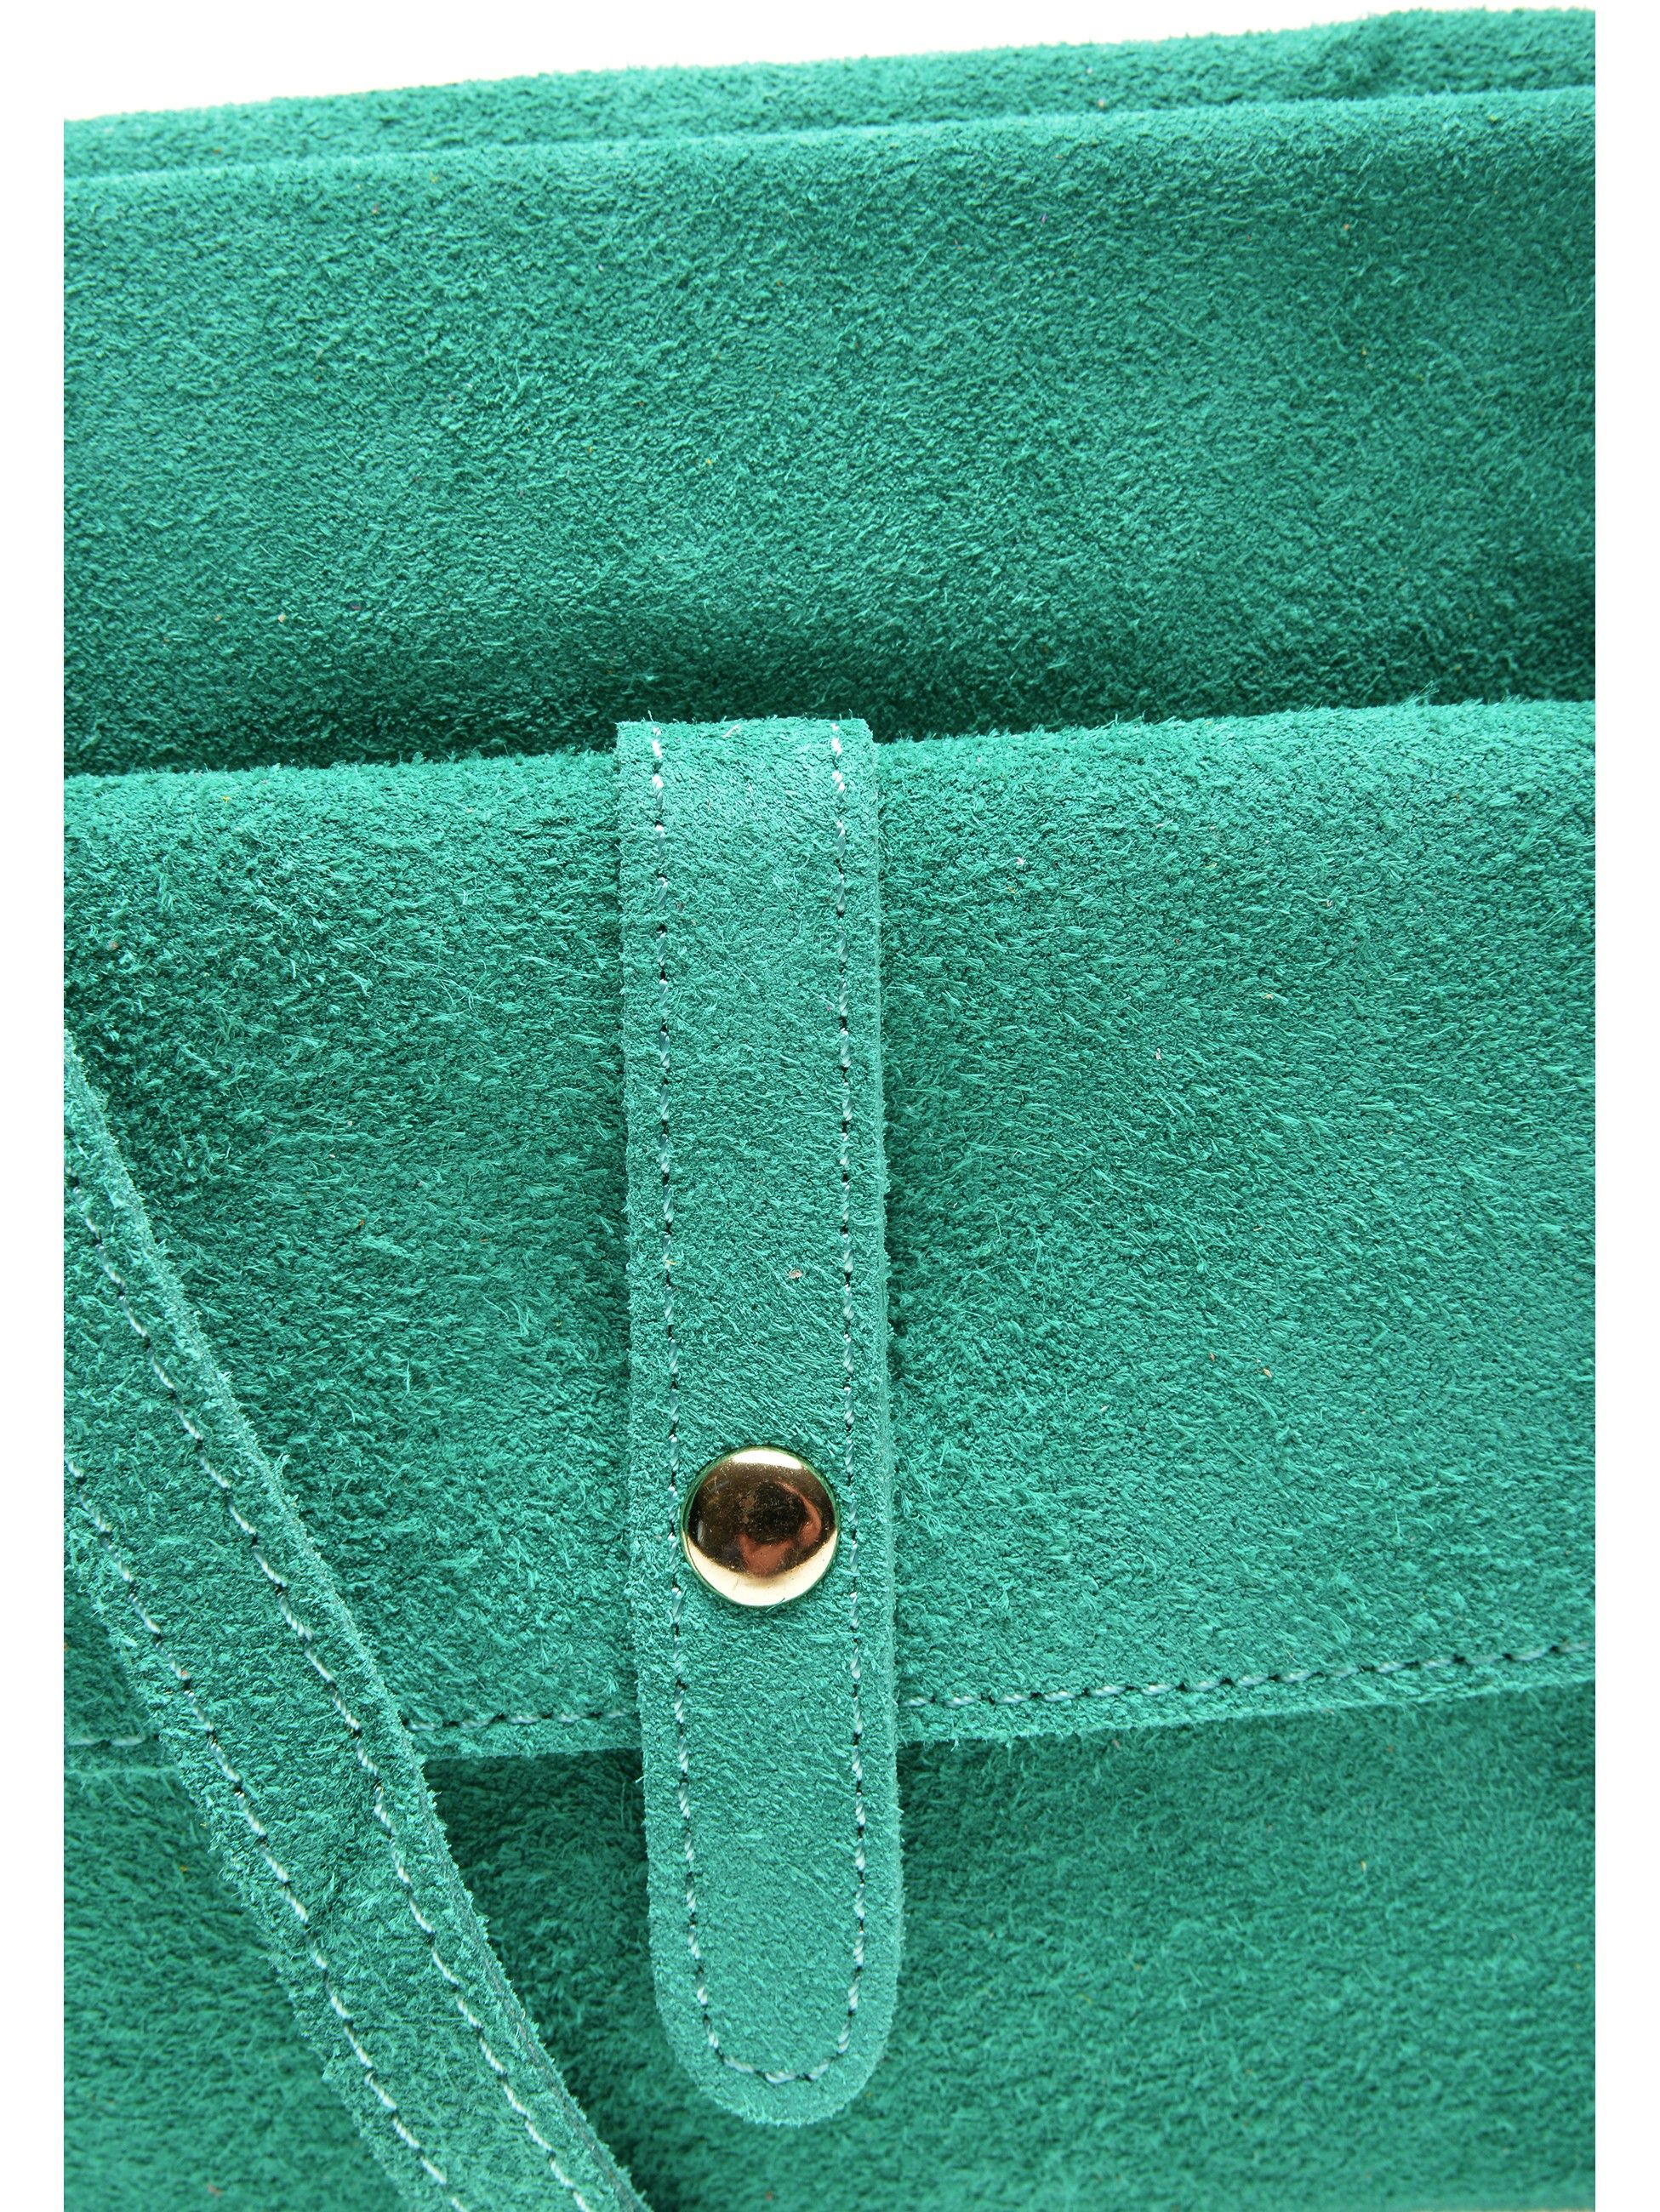 Shoulder bag
100% suede
Top zip closure
Inner zip pocket
Front button pocket
Dimensions (L): 19x24x9 cm
Handle: /
Shoulder strap: 120 cm adjustable